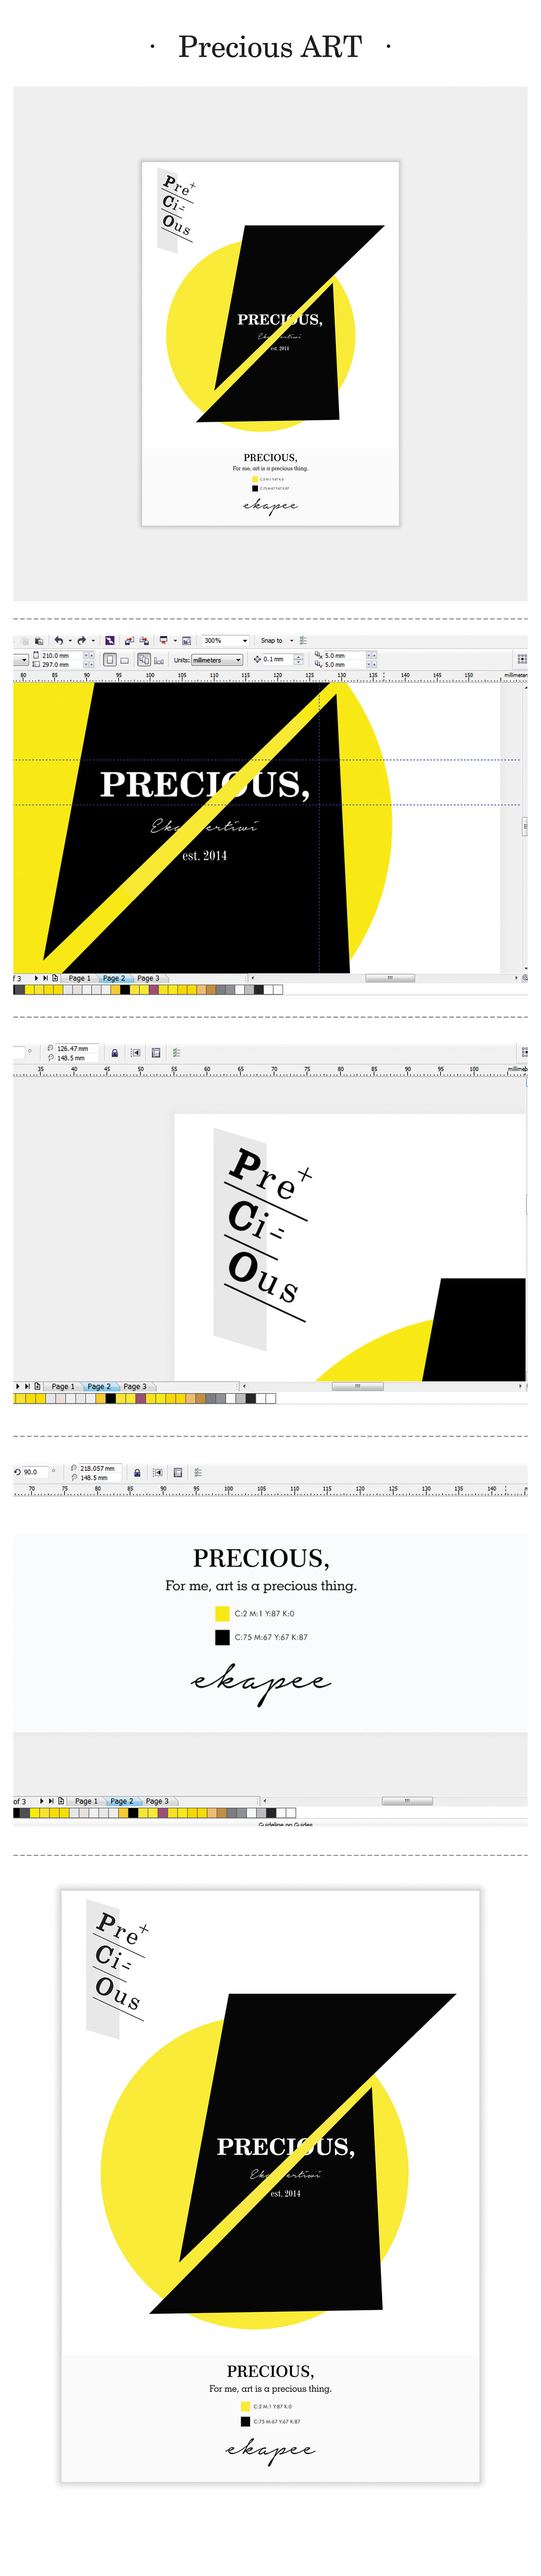 #typography #typeface #Design #graphicDesign #Branding #Precious #yellow